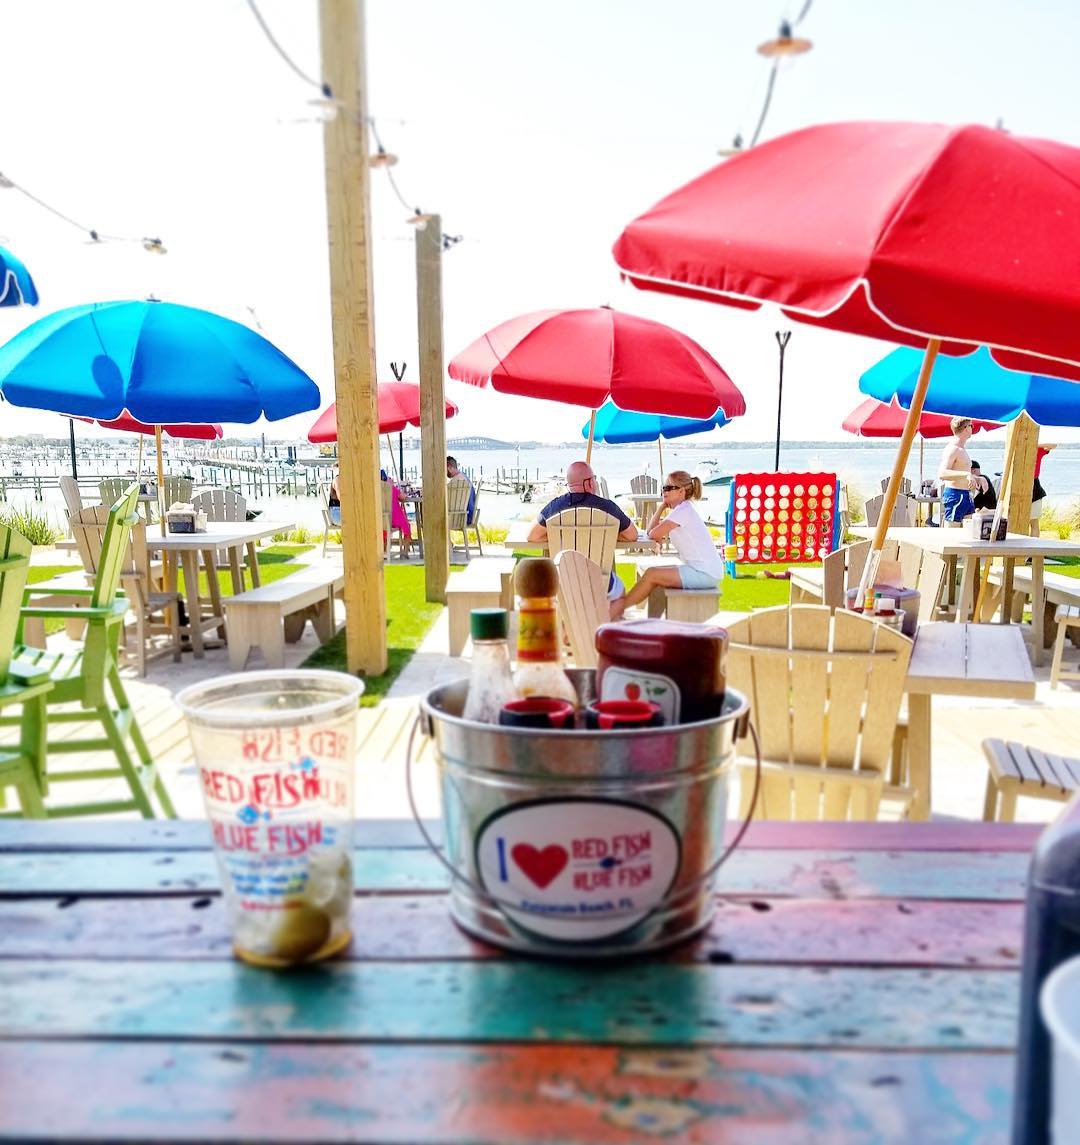 Pensacola Beach Restaurants - Red Fish Blue Fish - Original Photo